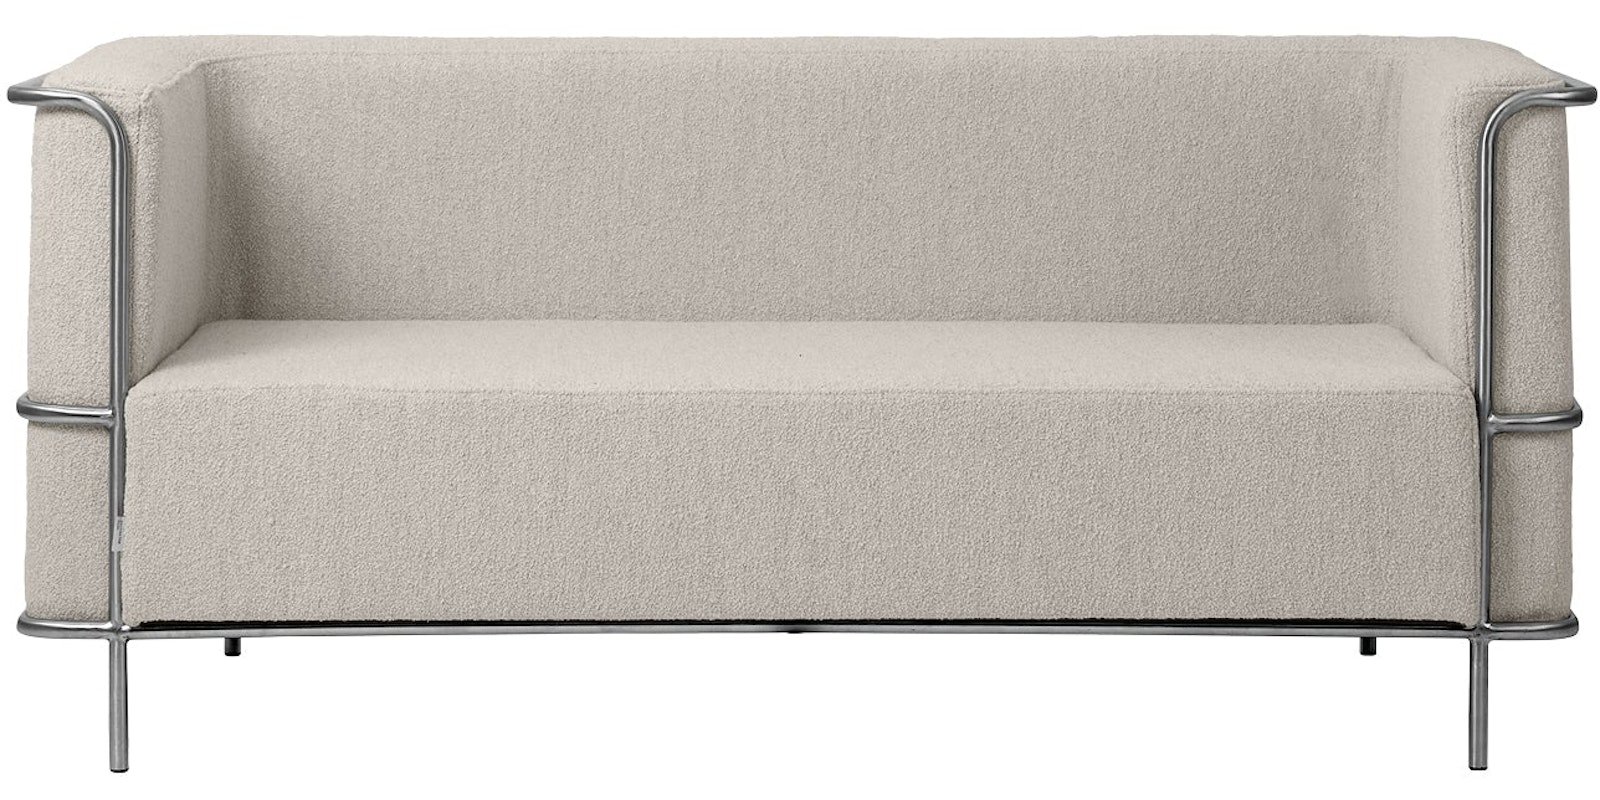 Modernist, 2-personers sofa by Kristina Dam (H: 70 cm. x B: 77 cm. x L: 164 cm., Beige)